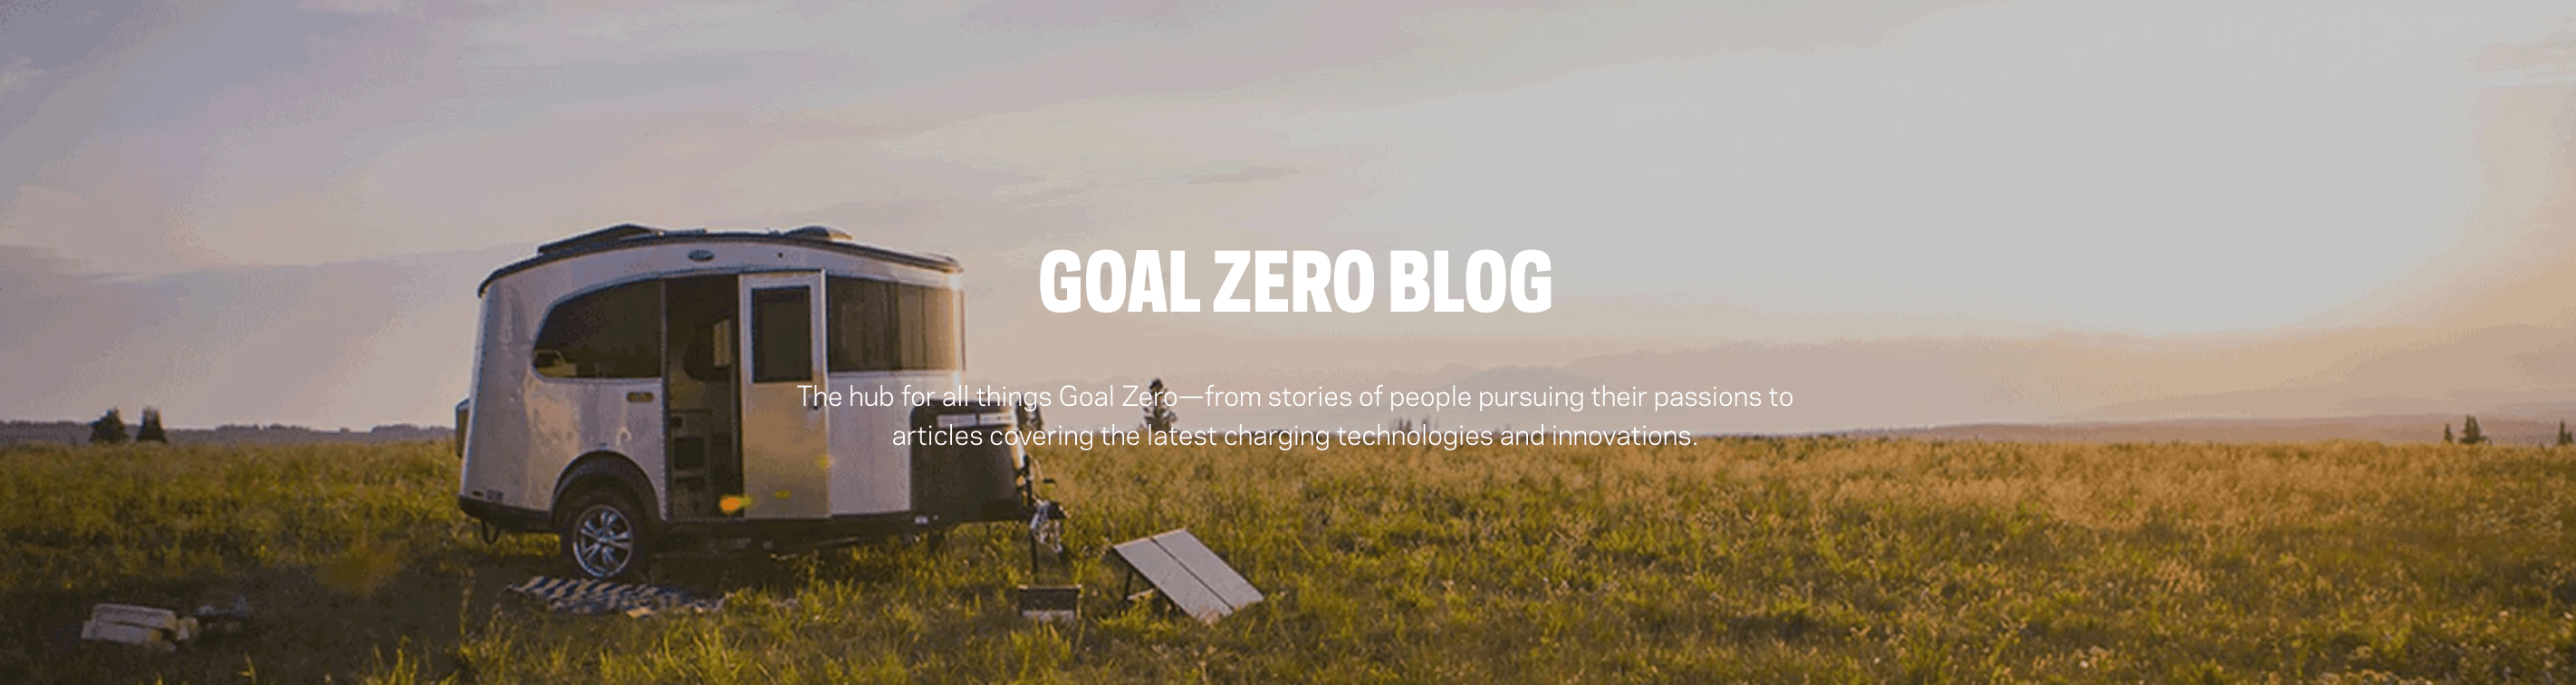 Goal Zero South Africa Blog